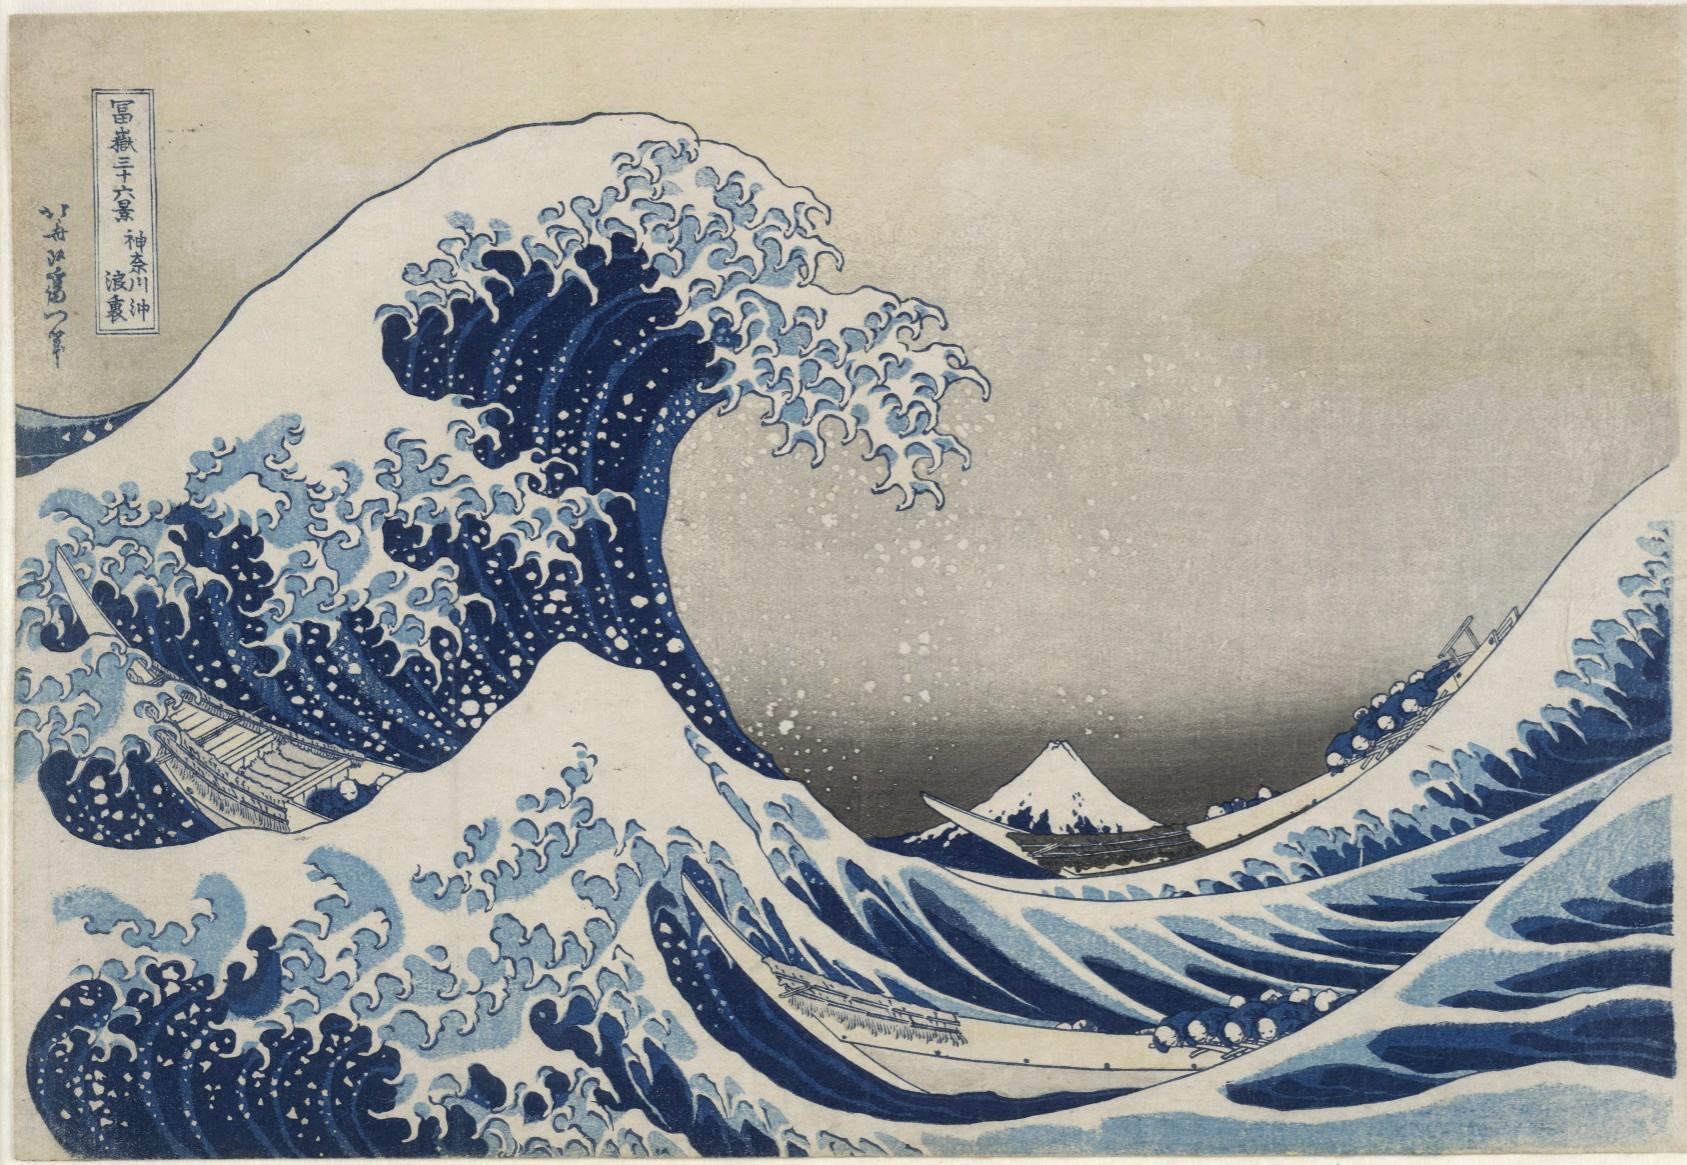 https://cdn.artandobject.com/sites/default/files/styles/gallery_item/public/hokusai-great-wave.jpg?itok=aMRj5QJp